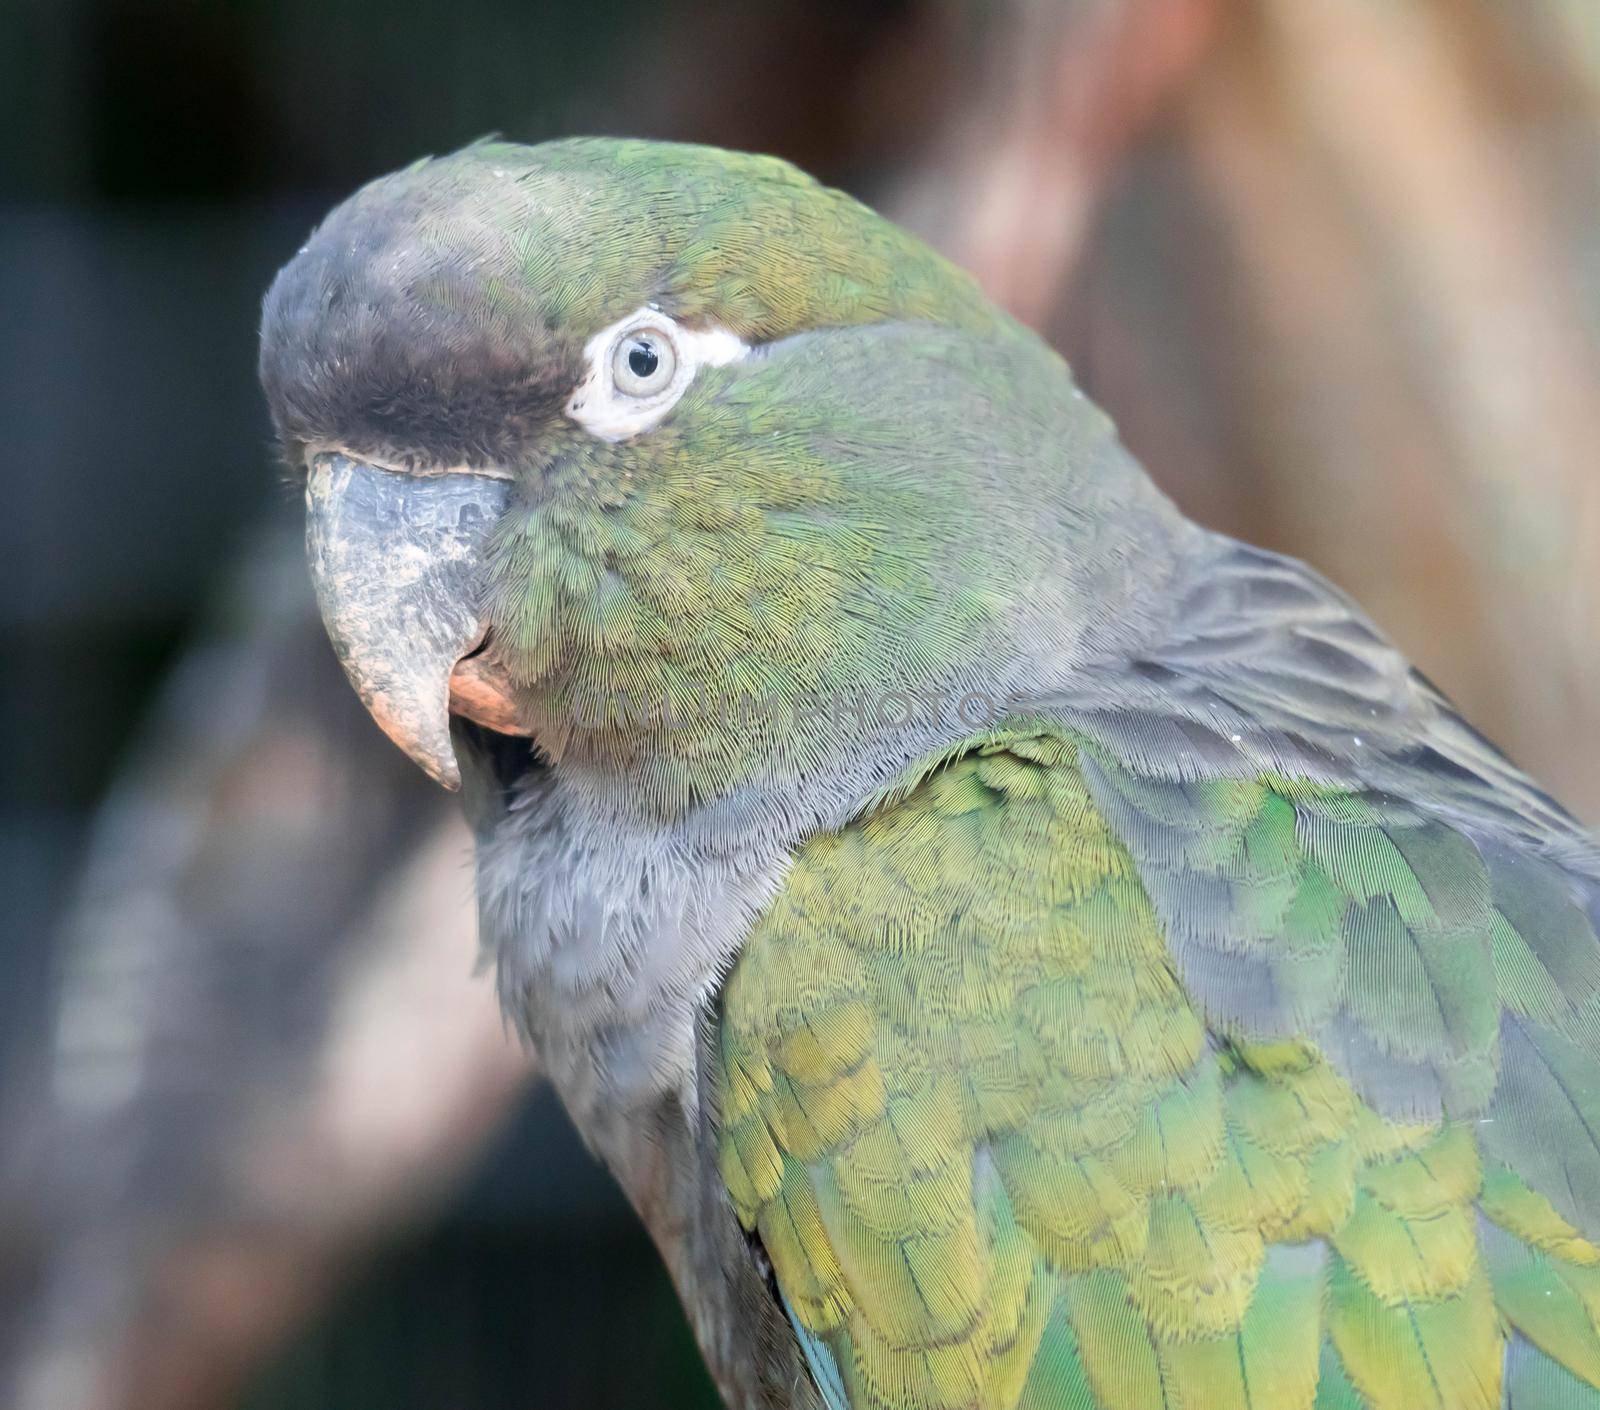 A Portrait Burrowing Parrot (Cyanoliseus patagonus) on the green blurry background